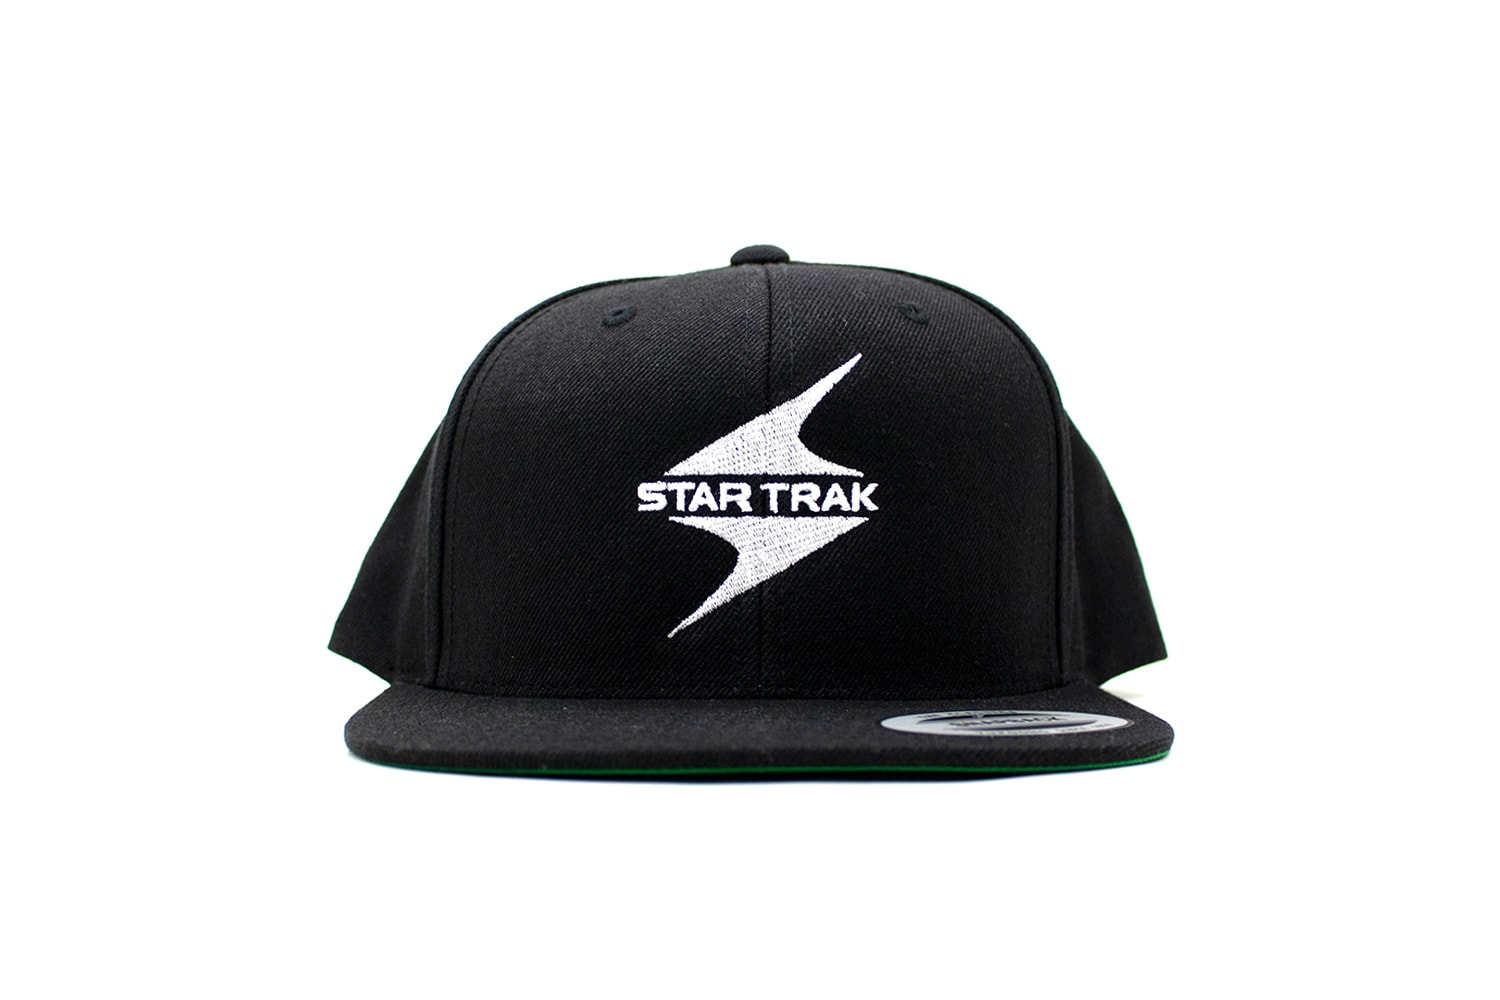 star trak billionaire boys club collaboration collection white cap hat black logo